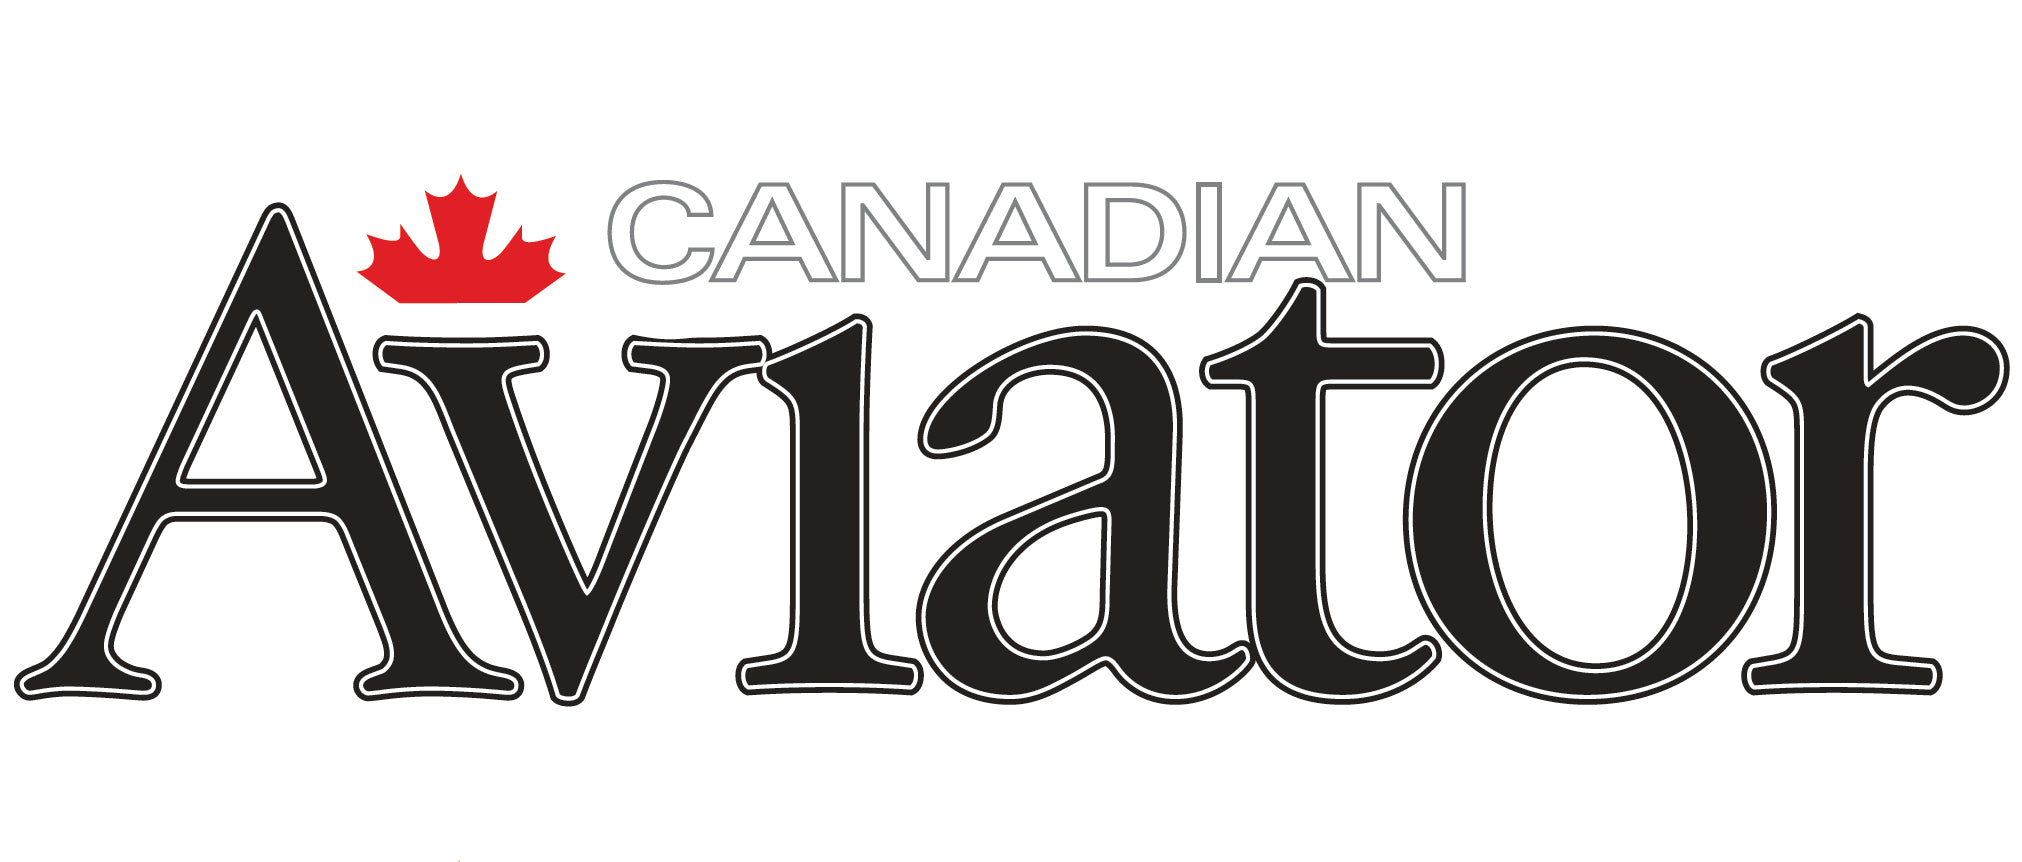 Canadian Aviator magazine - back issues